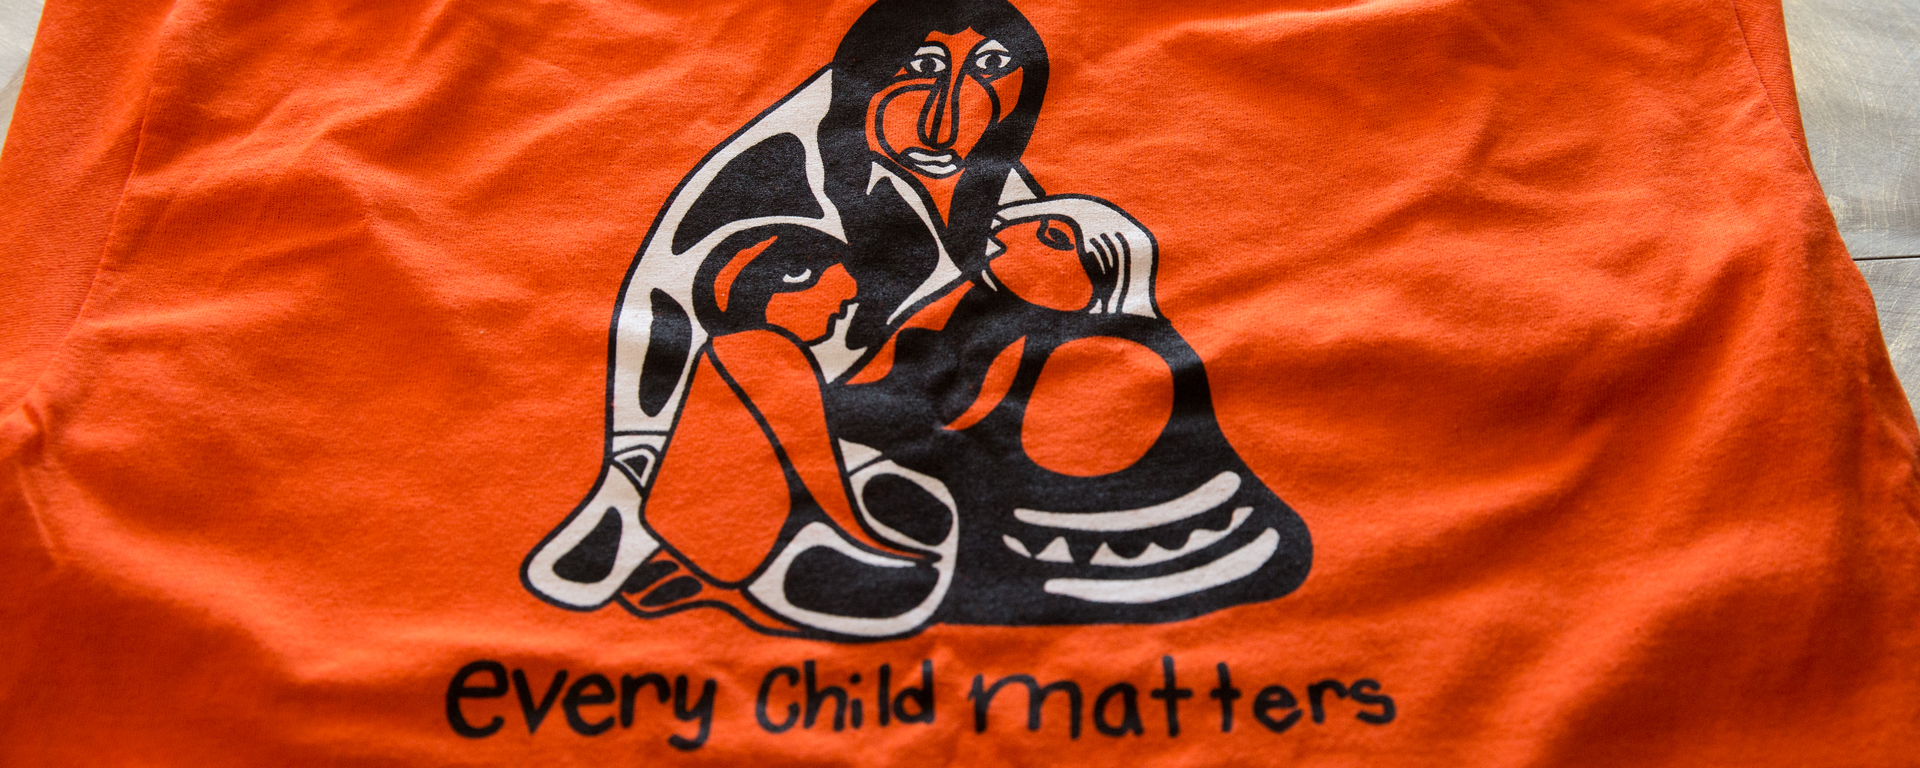 Every Child Matters: Orange Shirt Day